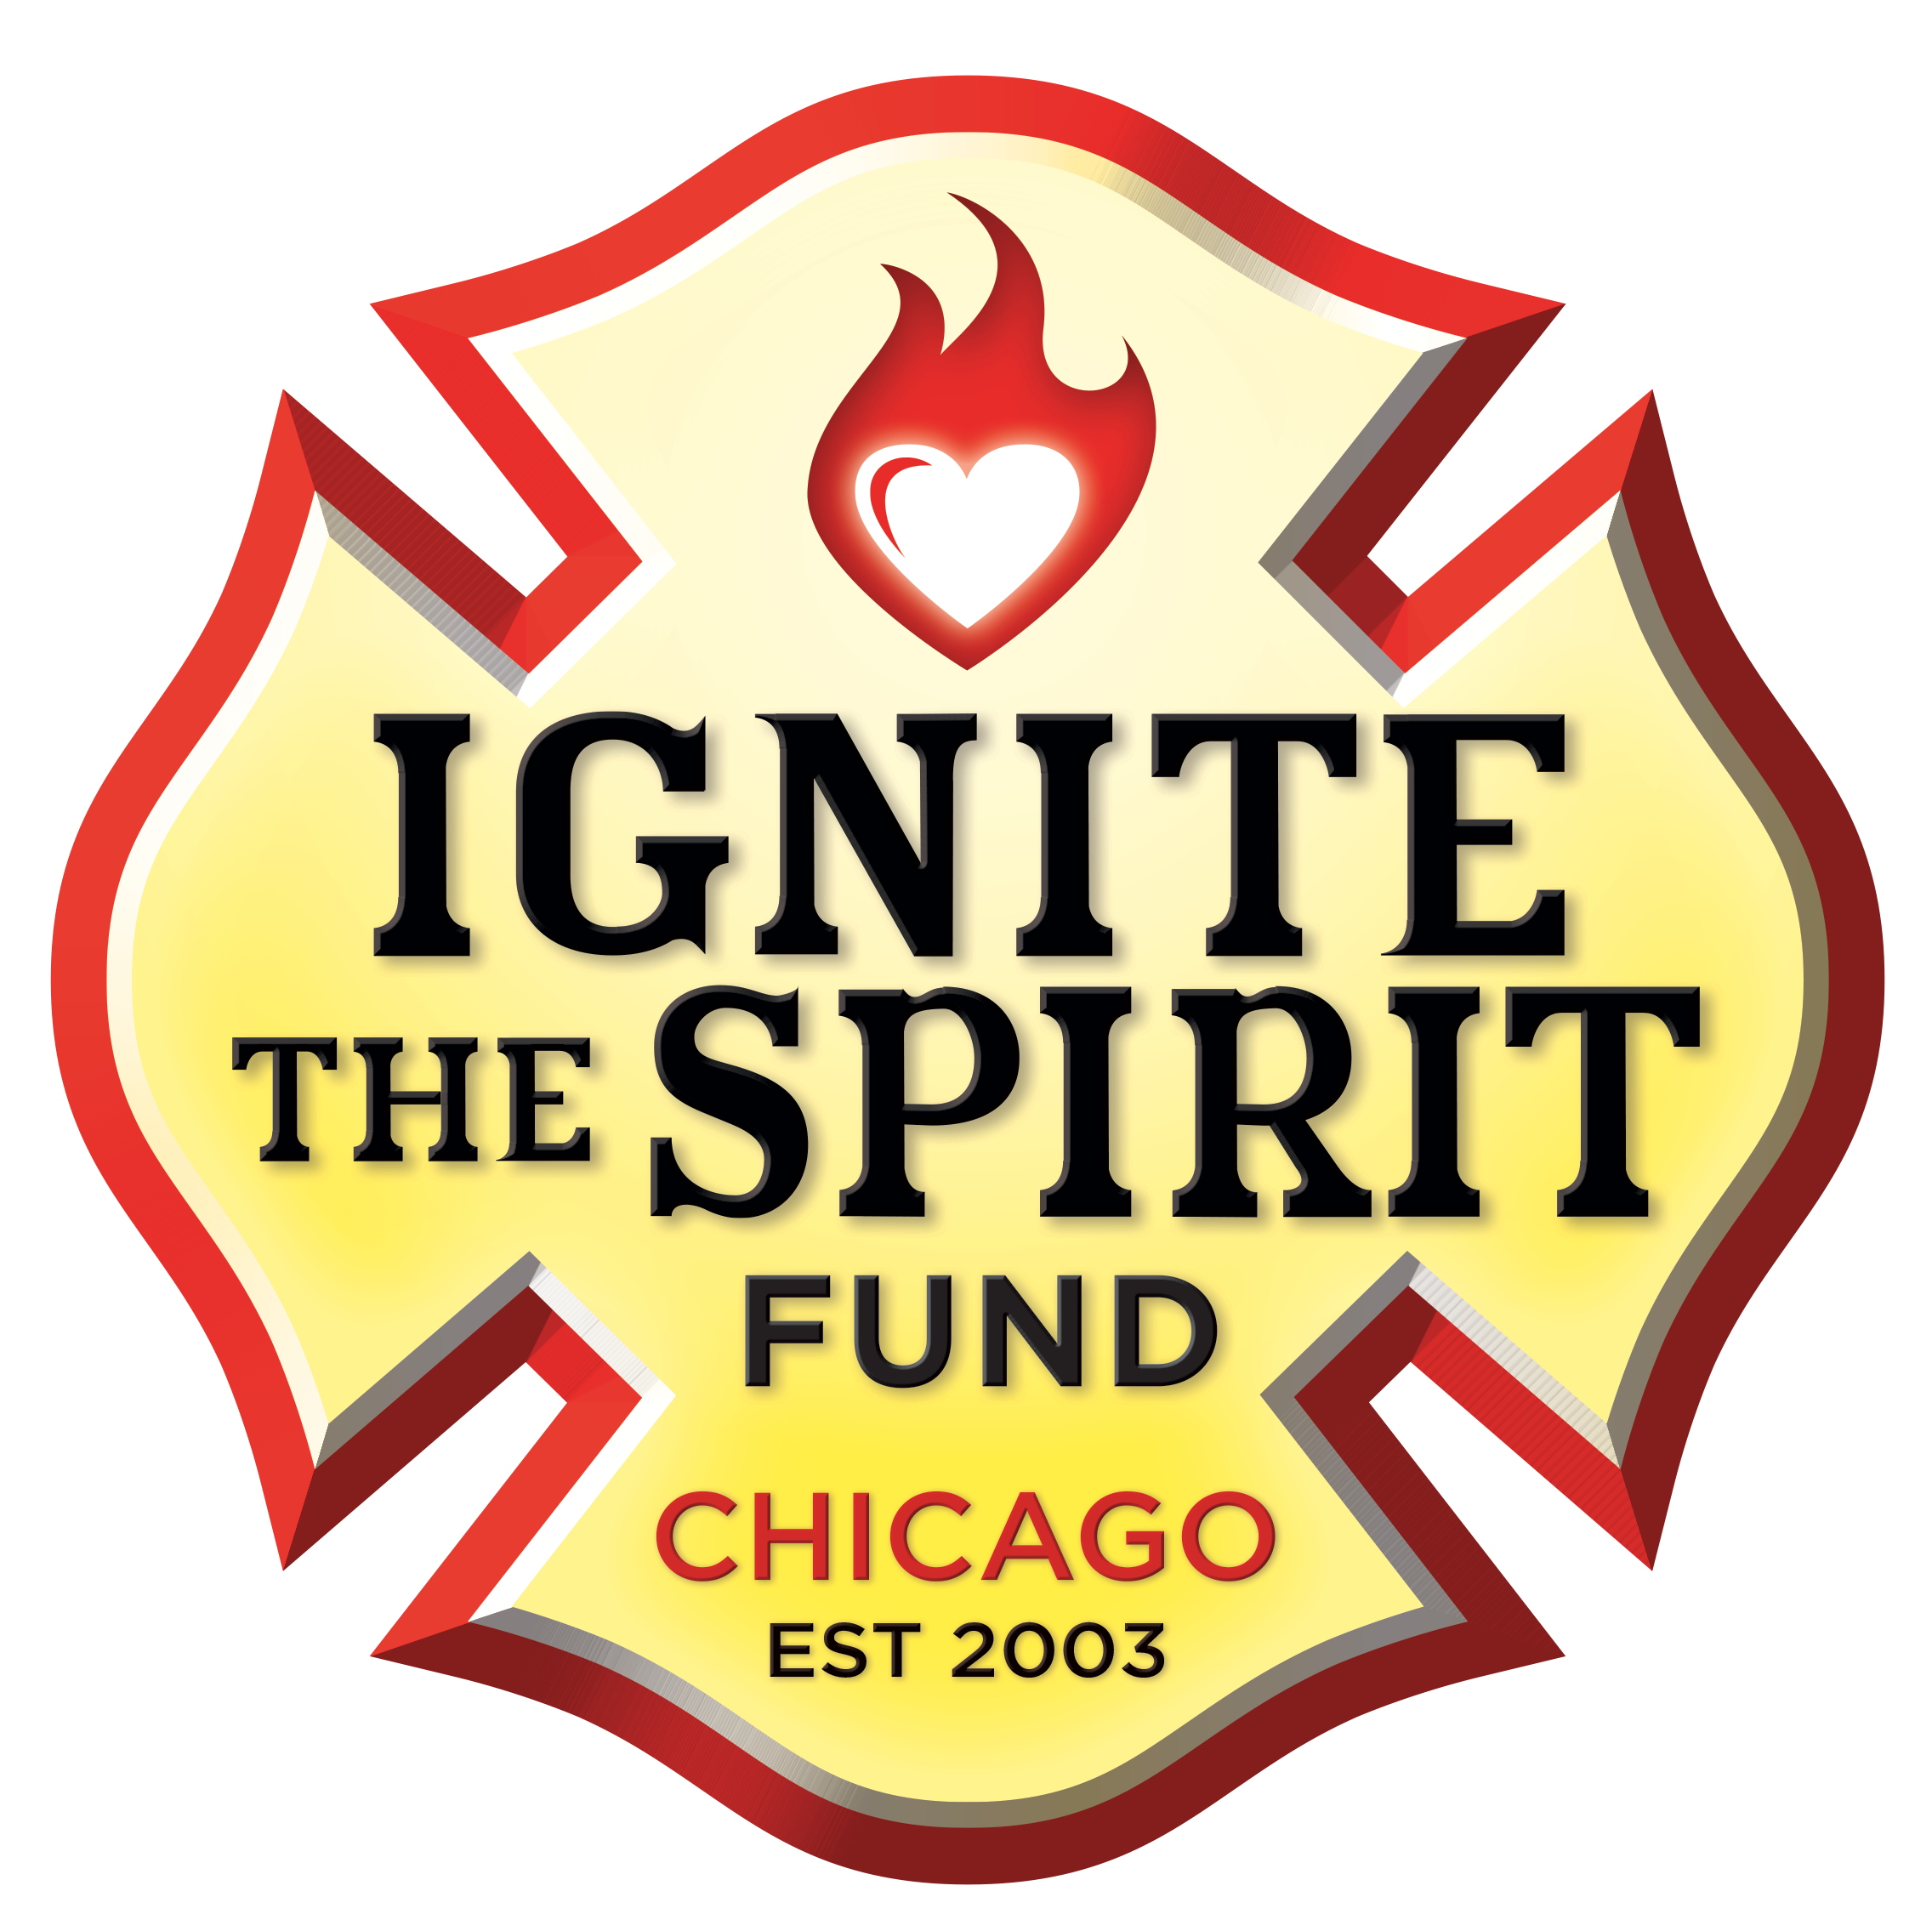 Ignite the Spirit Fund ChicagoE